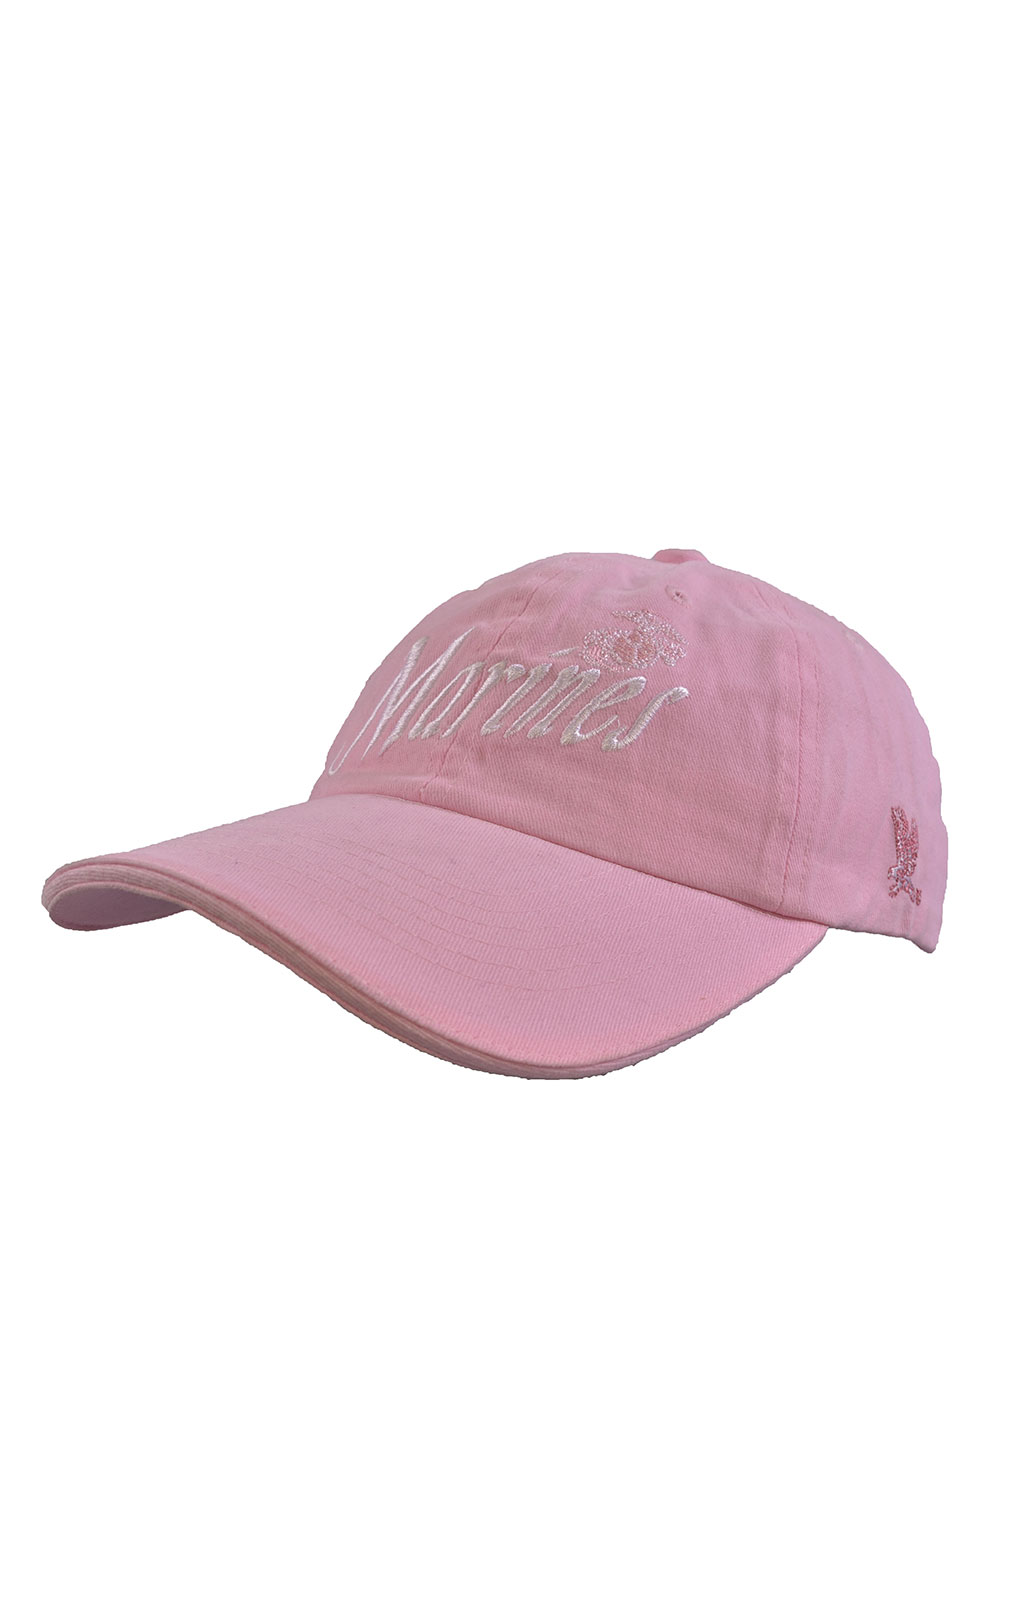 Бейсболка EC MARINES LADIES pink (5656) 